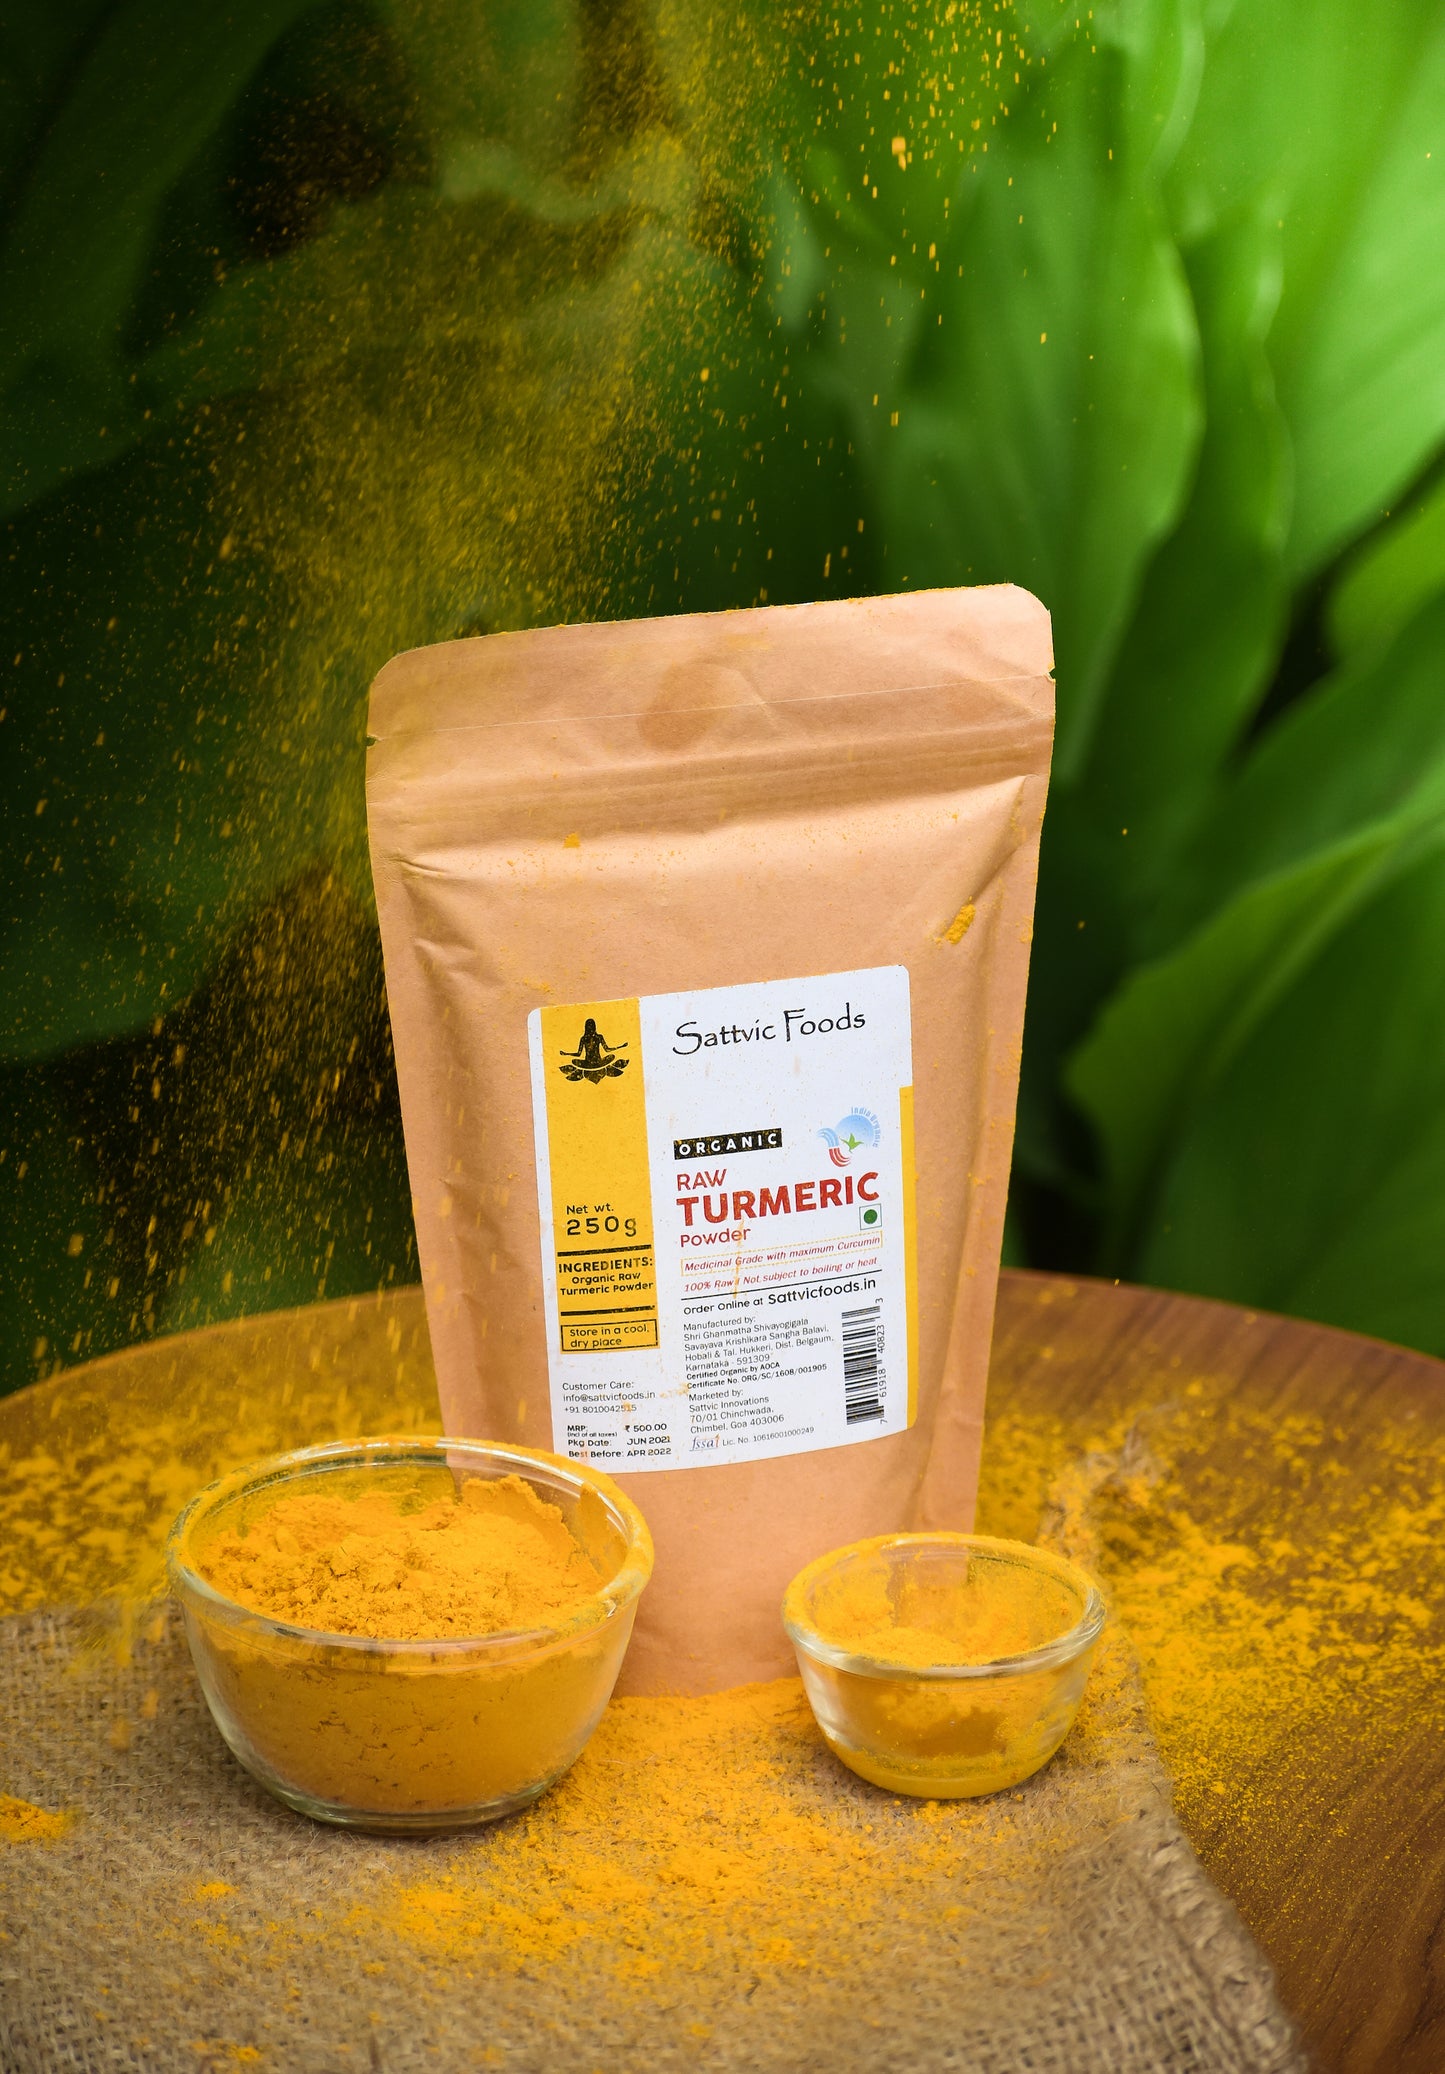 Organic Raw Turmeric Powder